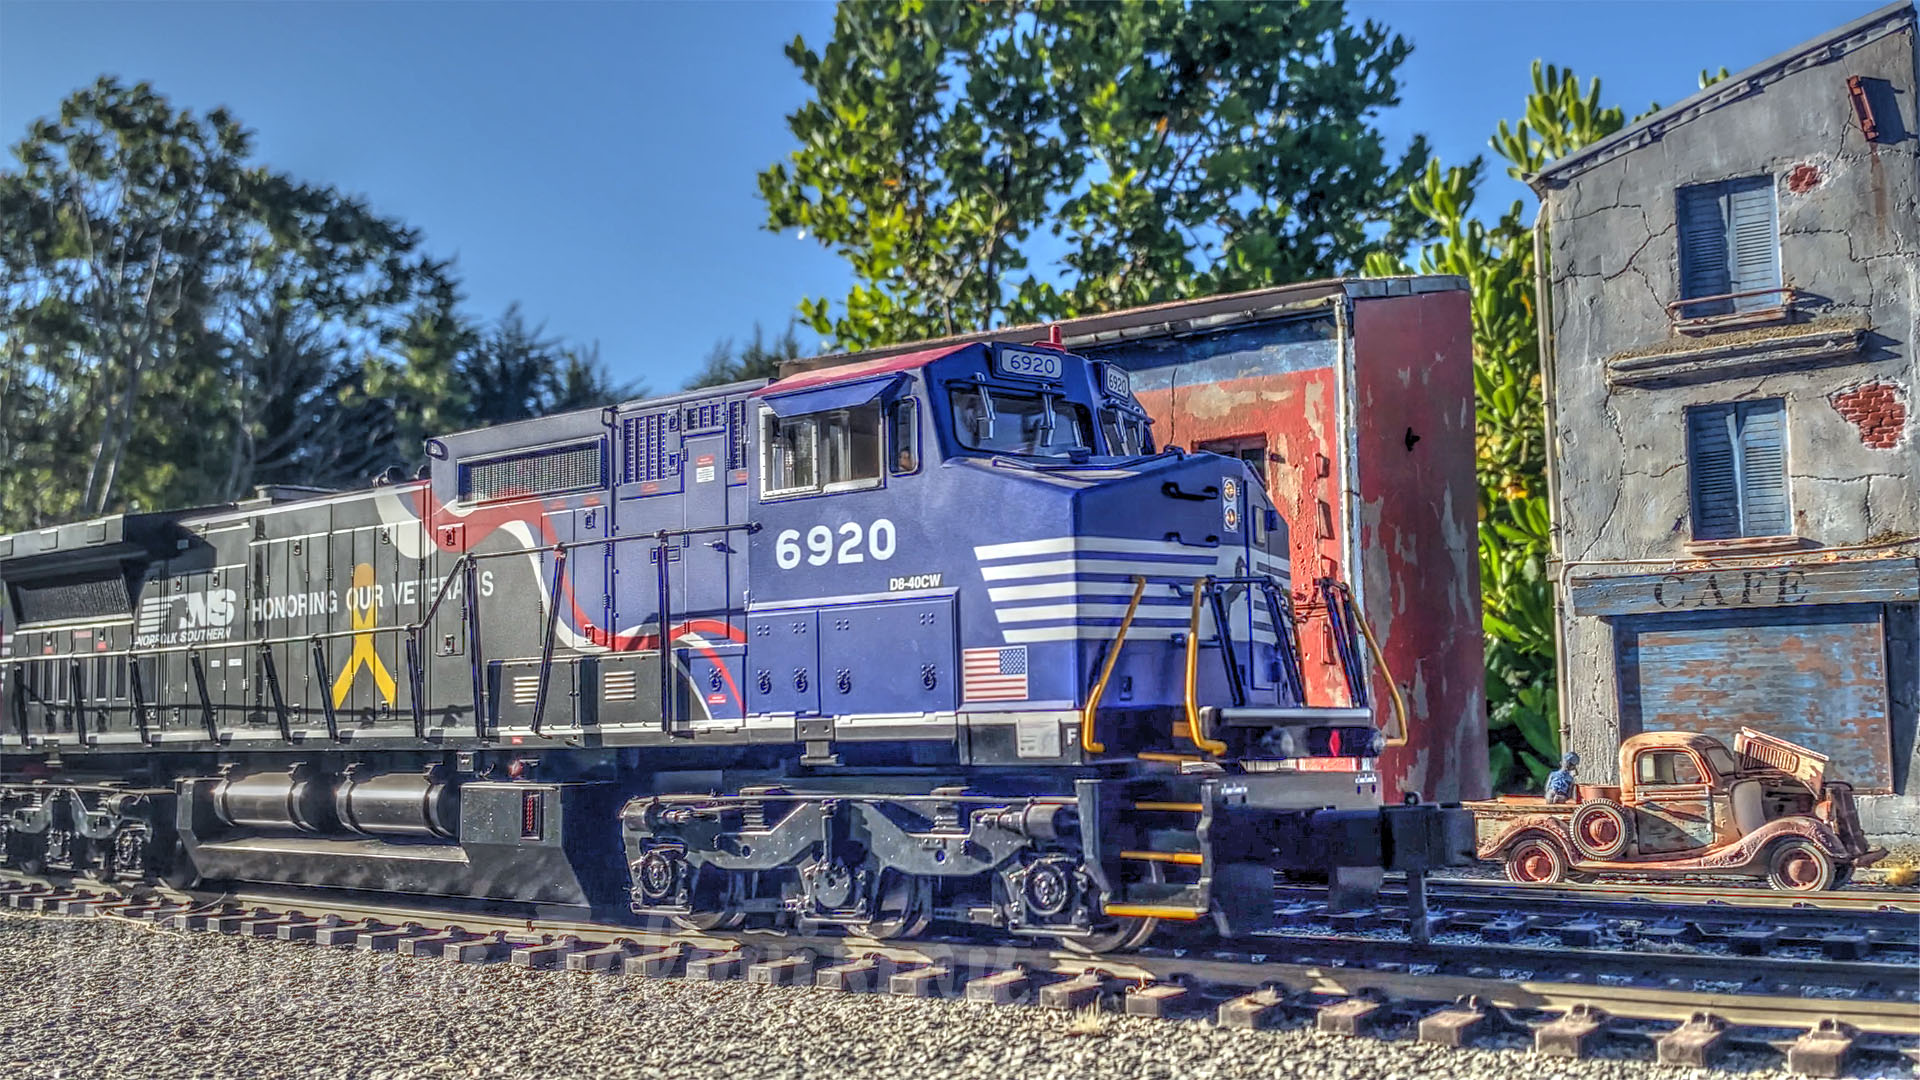 Ferromodelismo Chile: Model railroad operating session with Märklin trains in Gauge 1